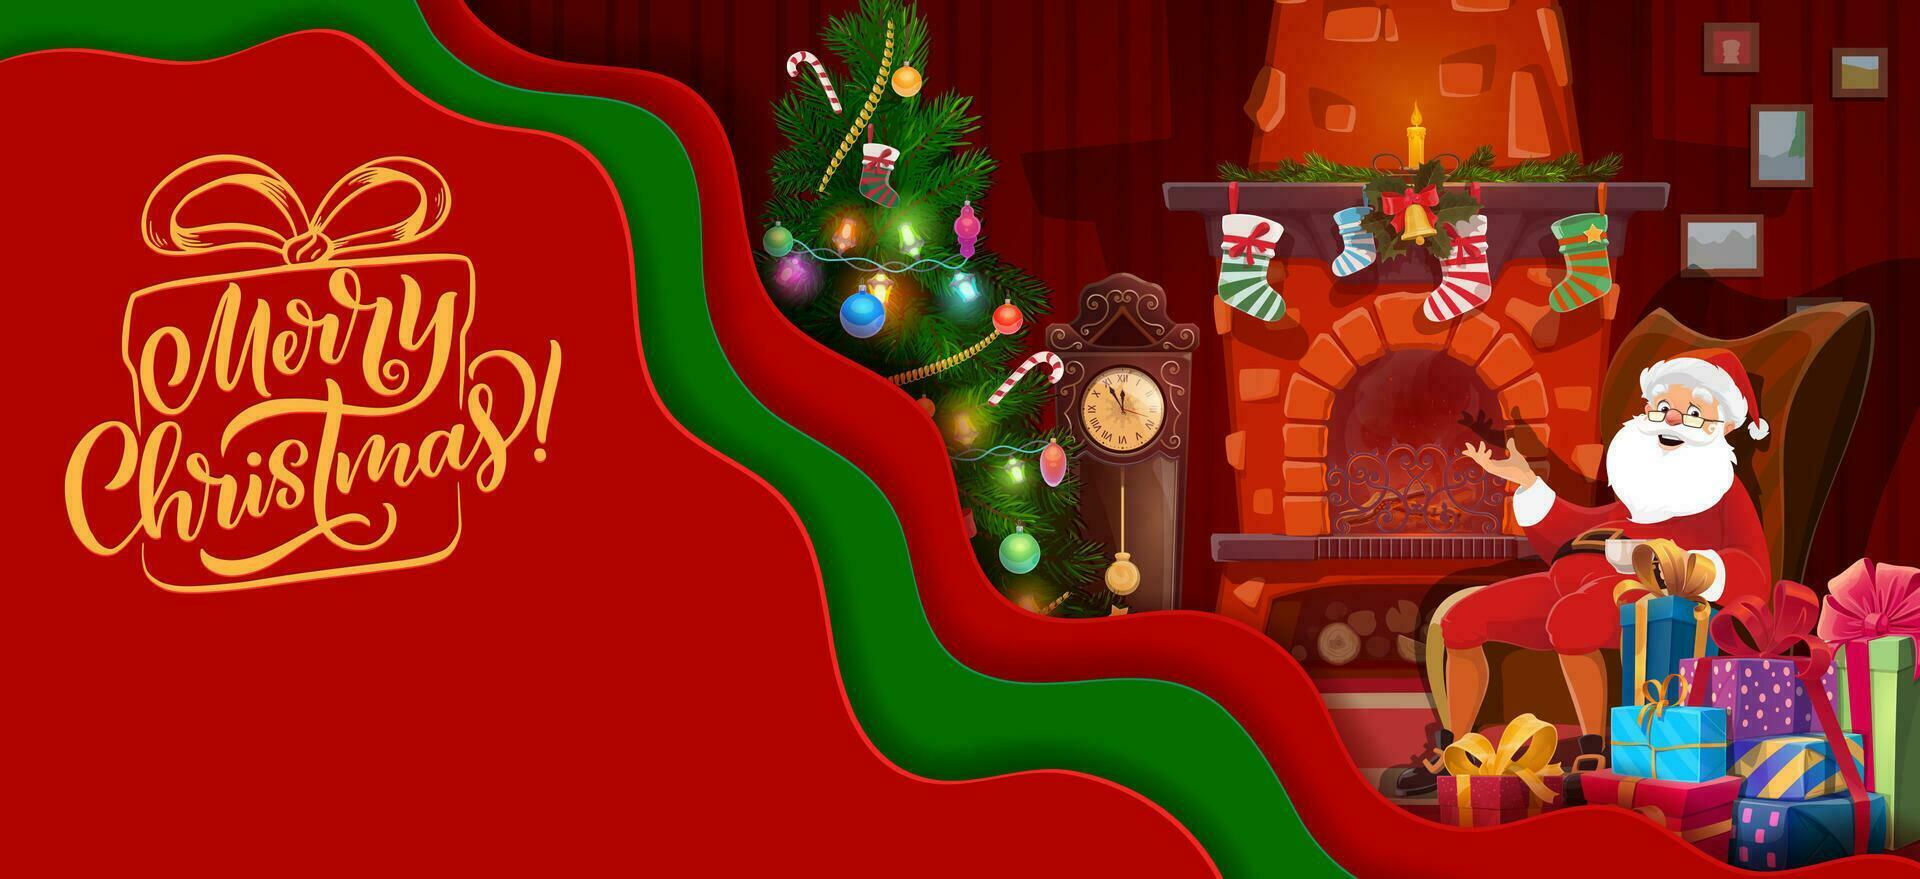 Christmas paper cut santa near holiday fireplace vector